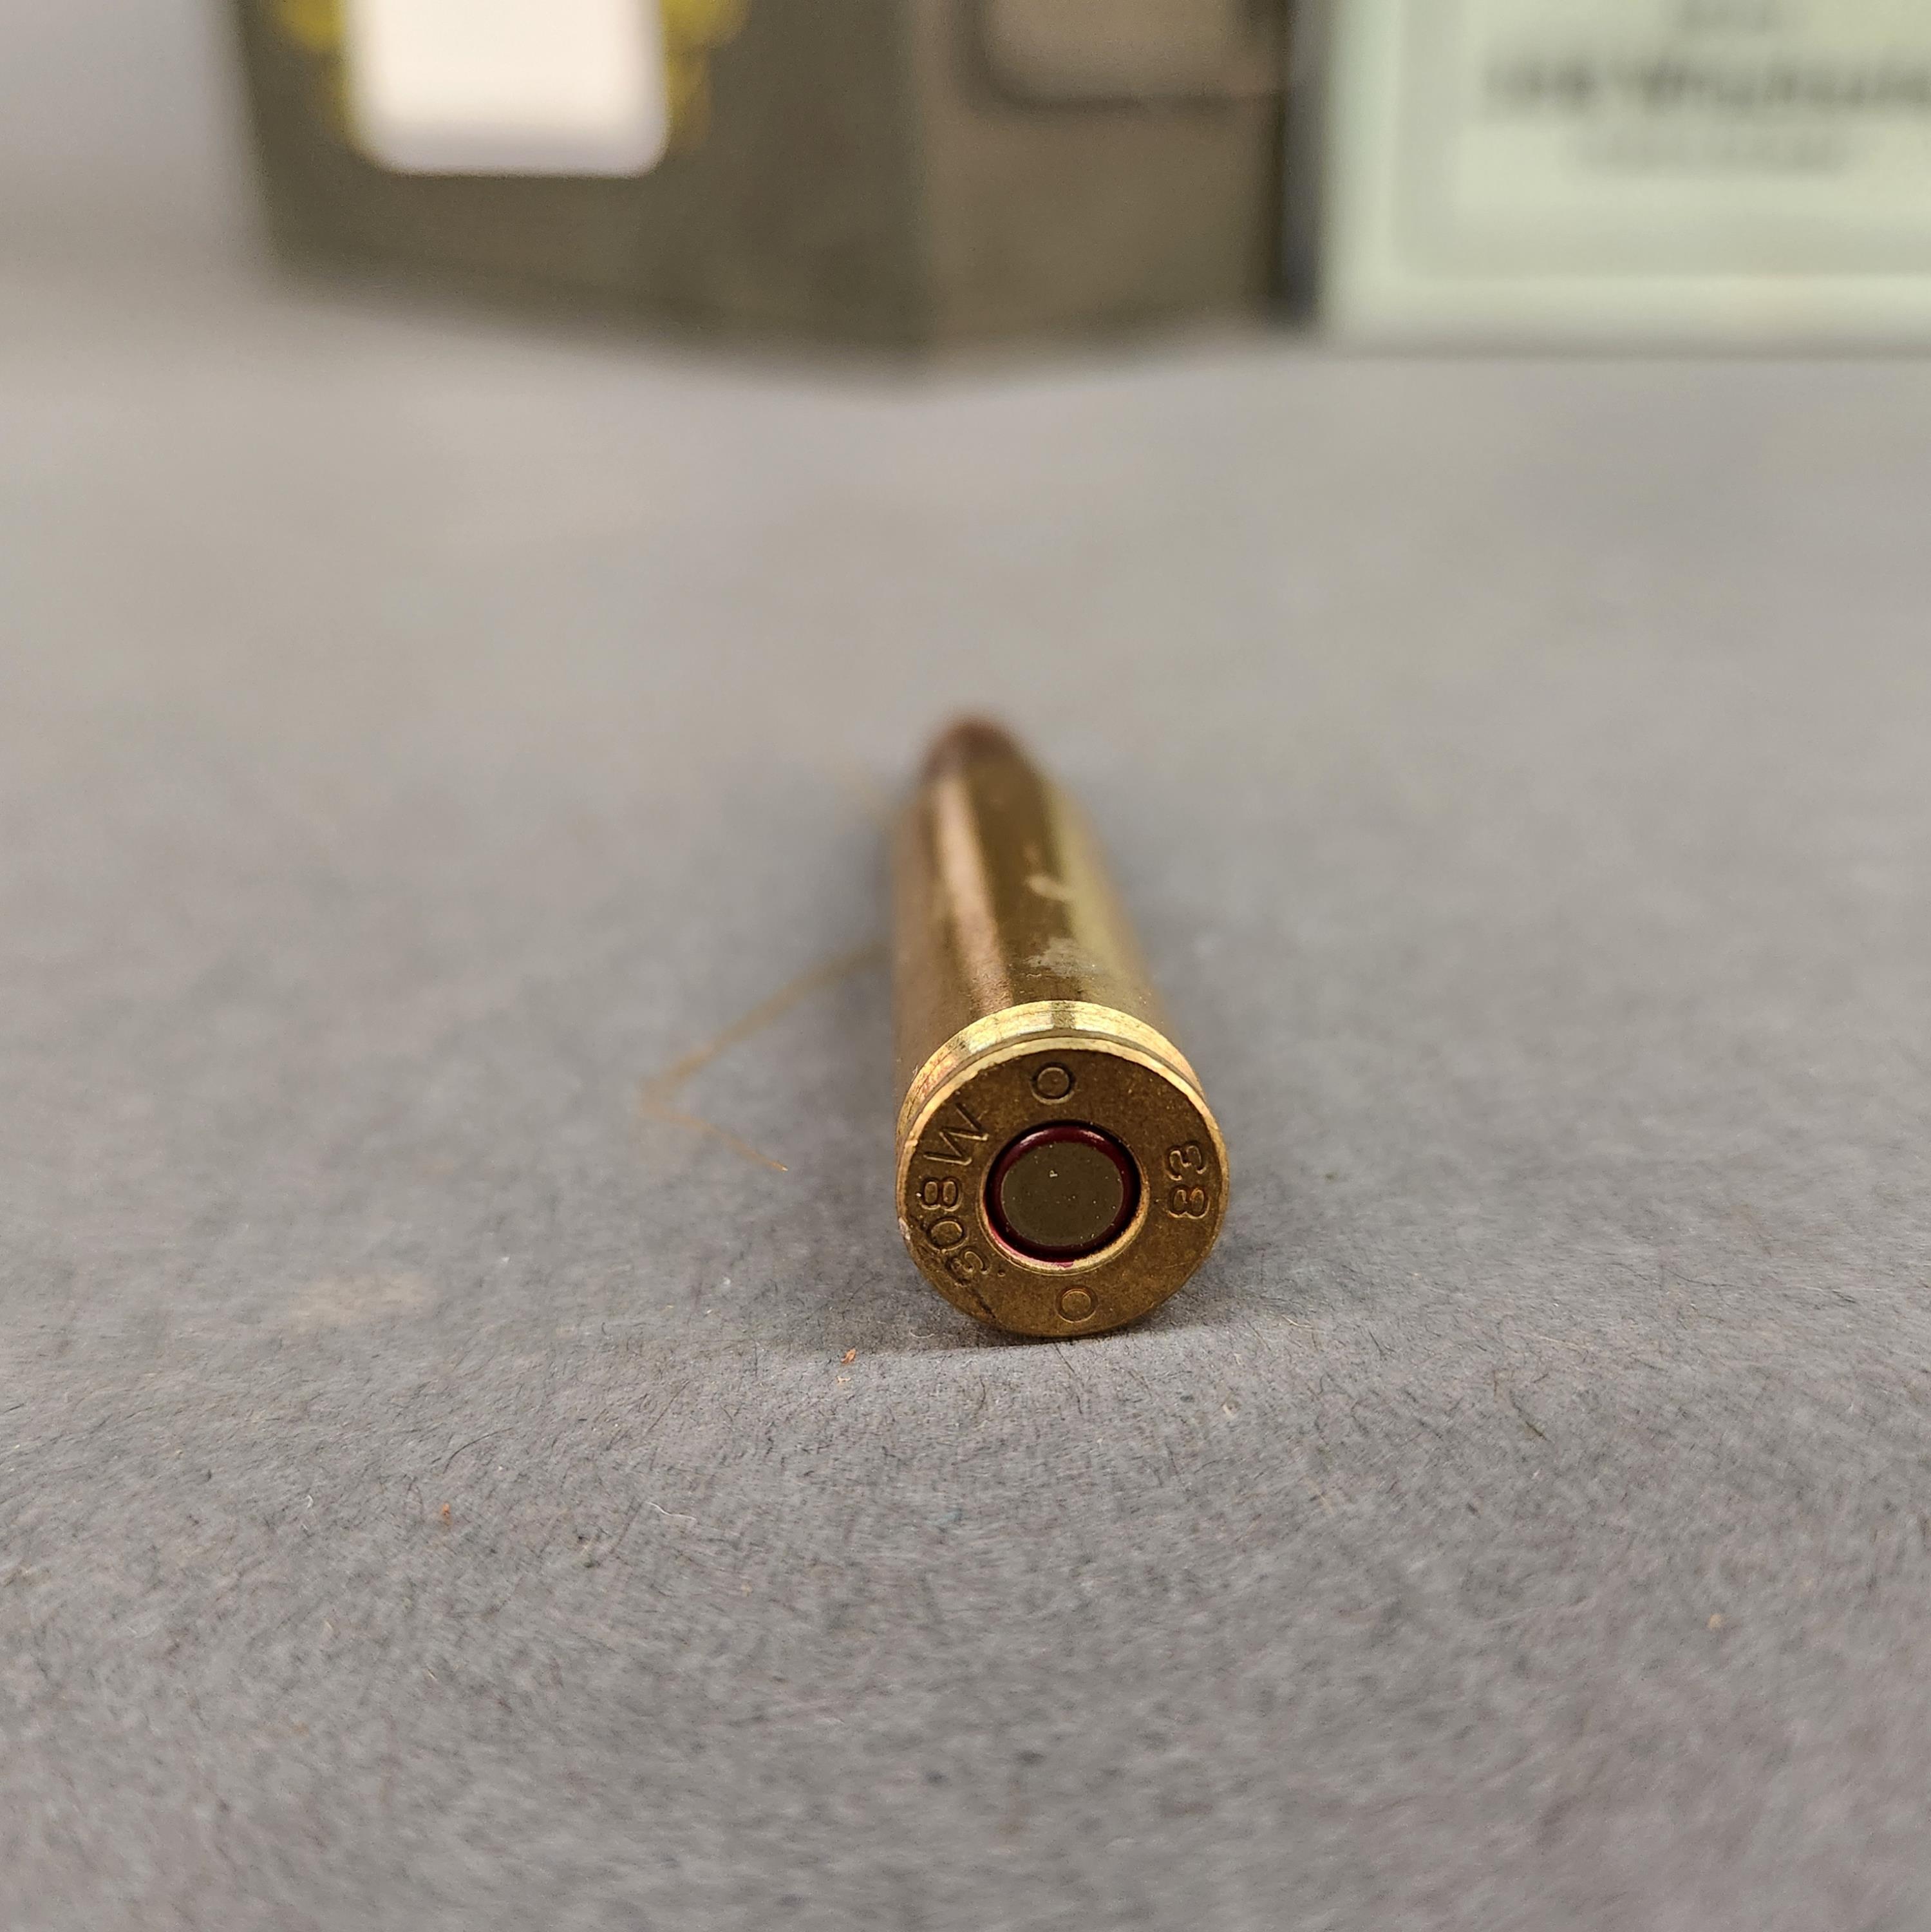 Czech Mil Surp .308 Win ammunition, 280 rounds